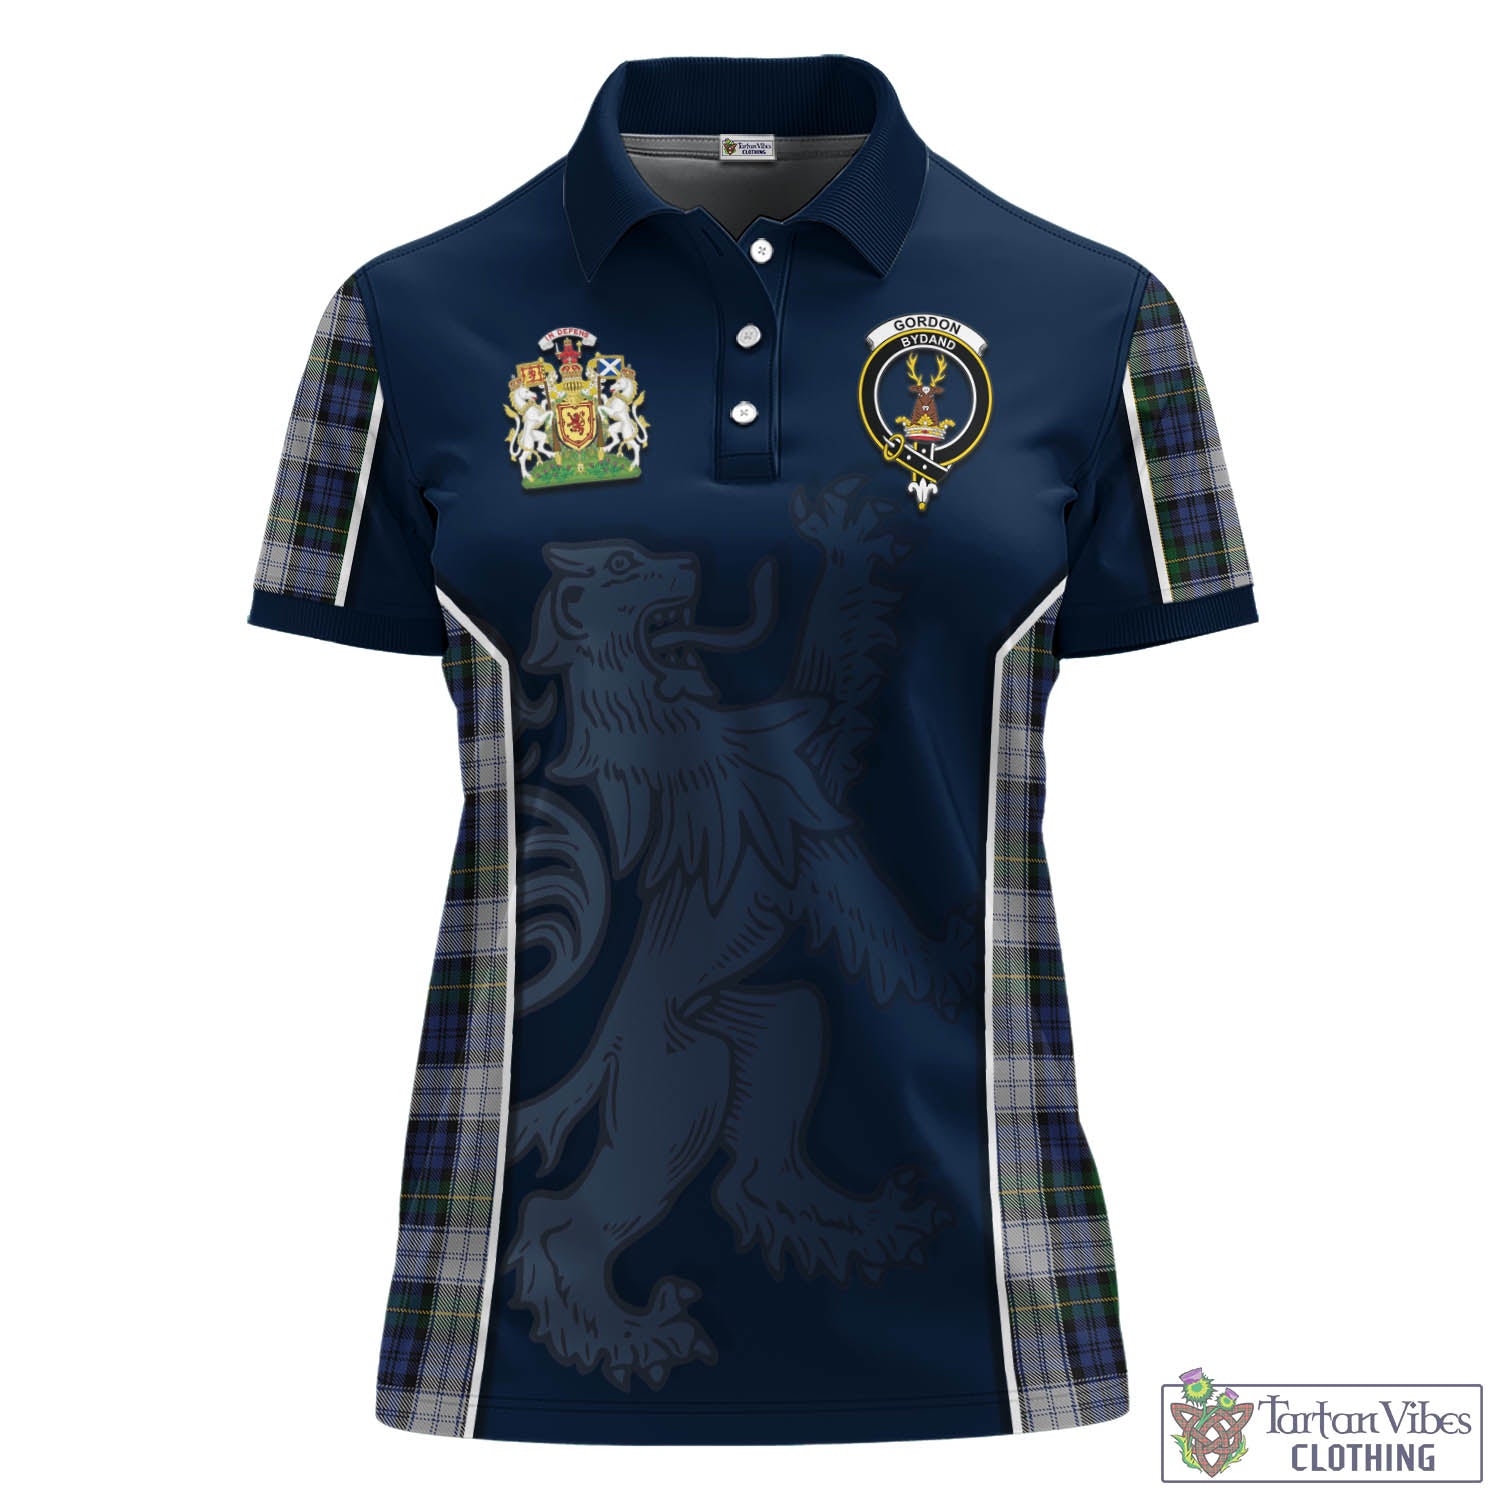 Tartan Vibes Clothing Gordon Dress Tartan Women's Polo Shirt with Family Crest and Lion Rampant Vibes Sport Style